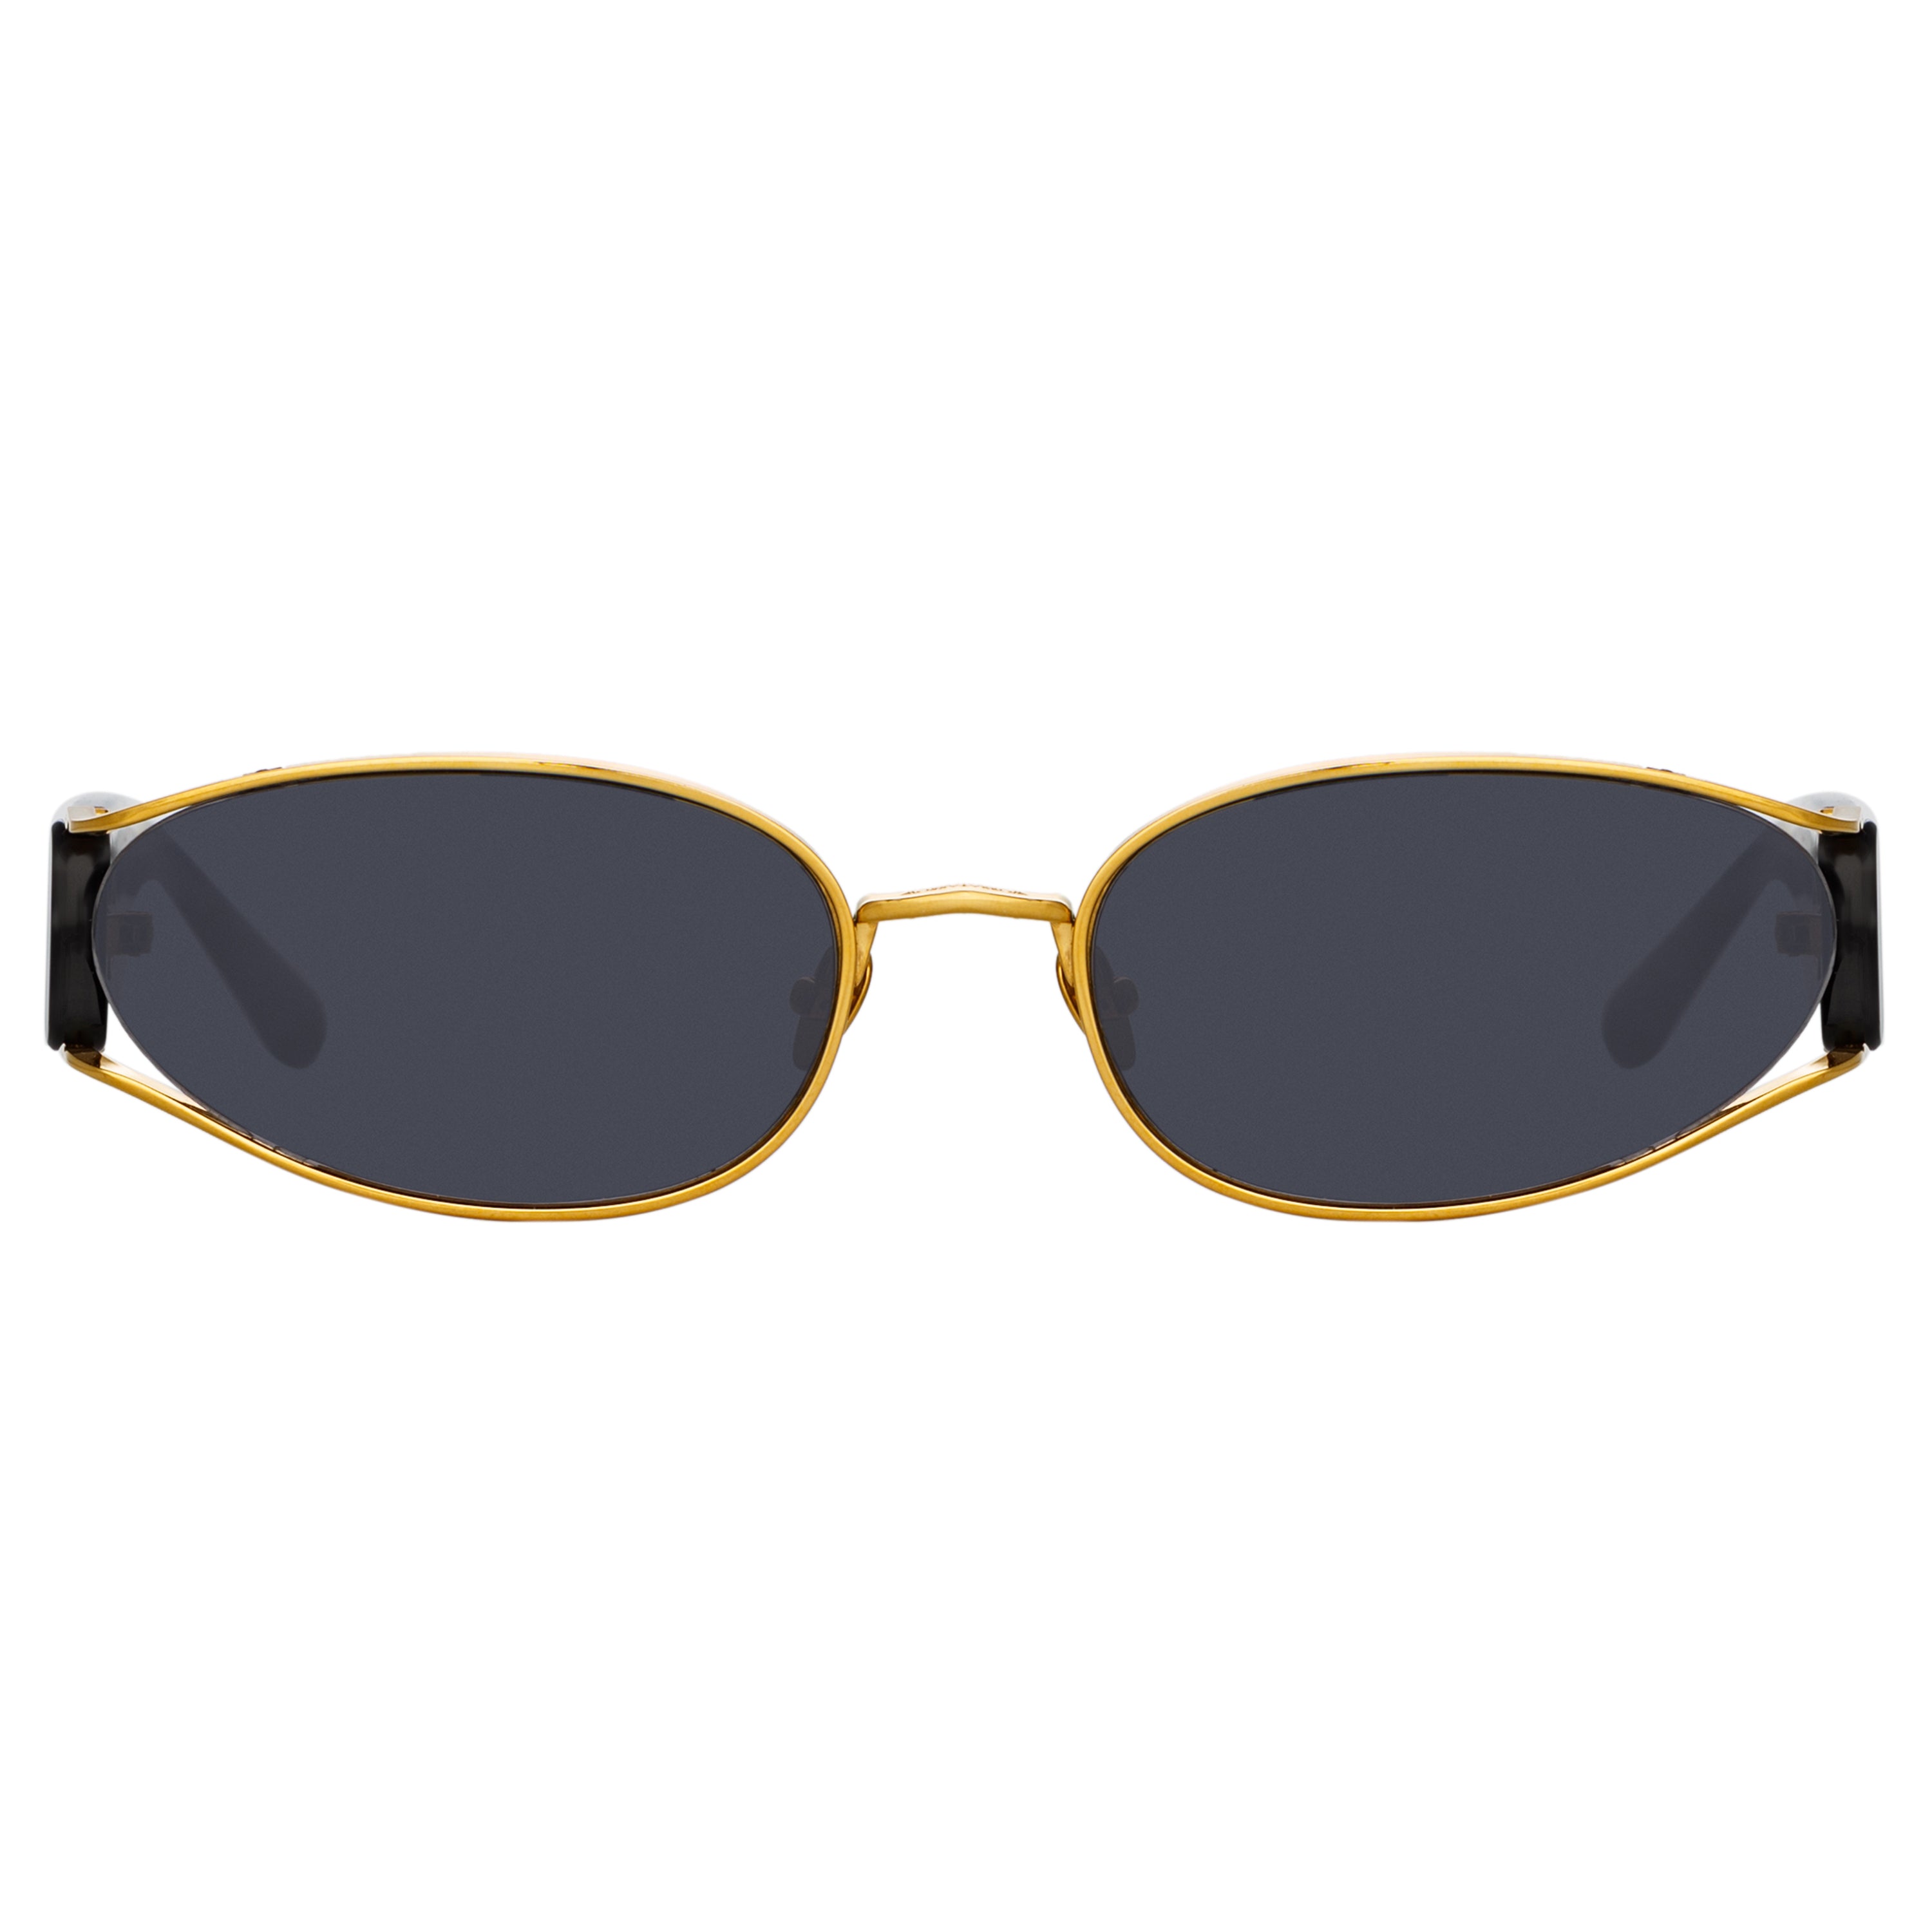 Shelby Cat Eye Sunglasses in Black